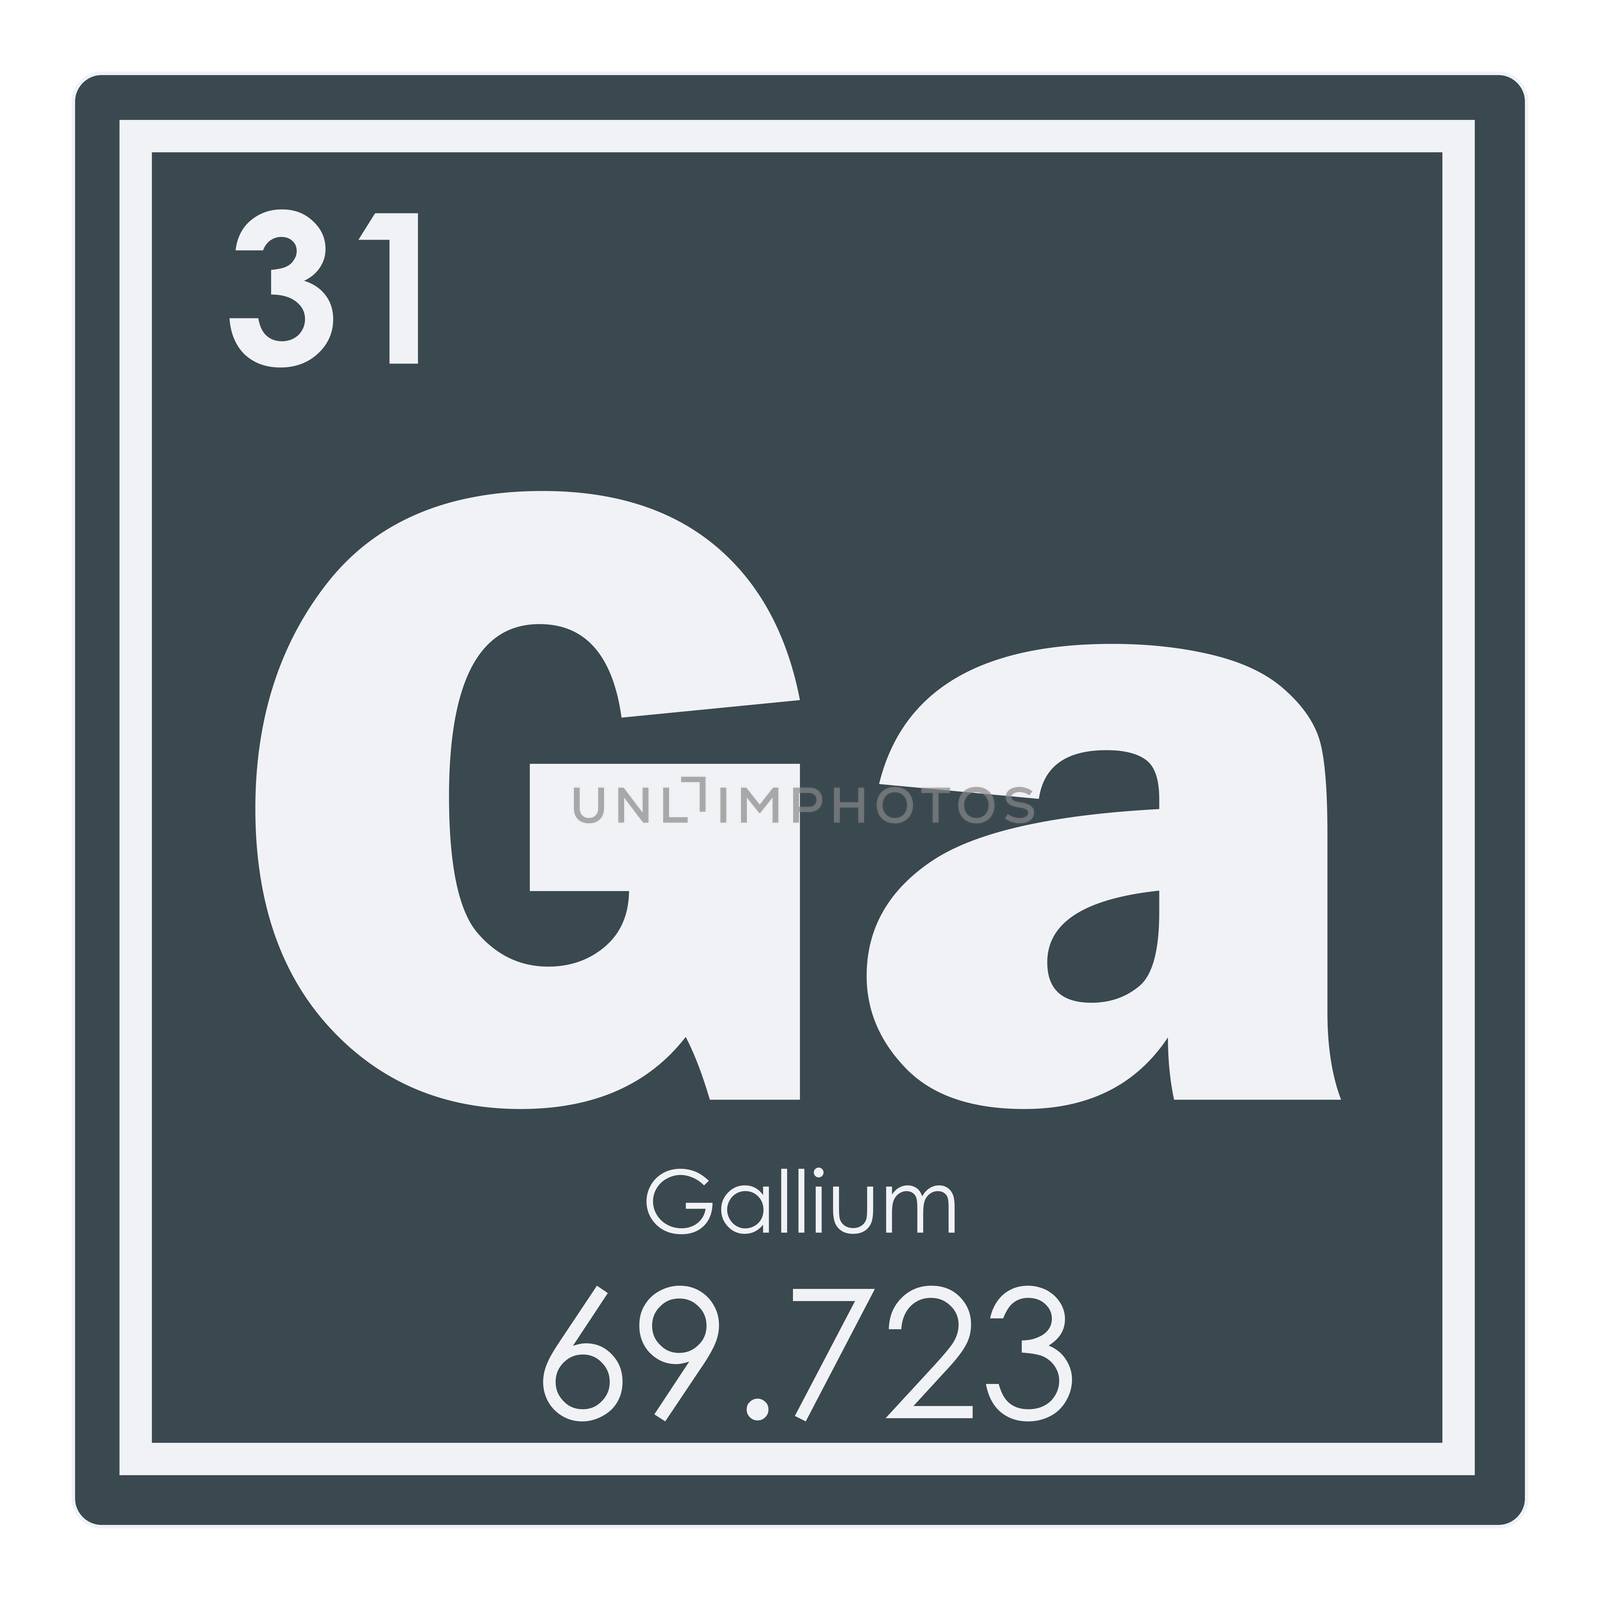 Gallium chemical element by tony4urban